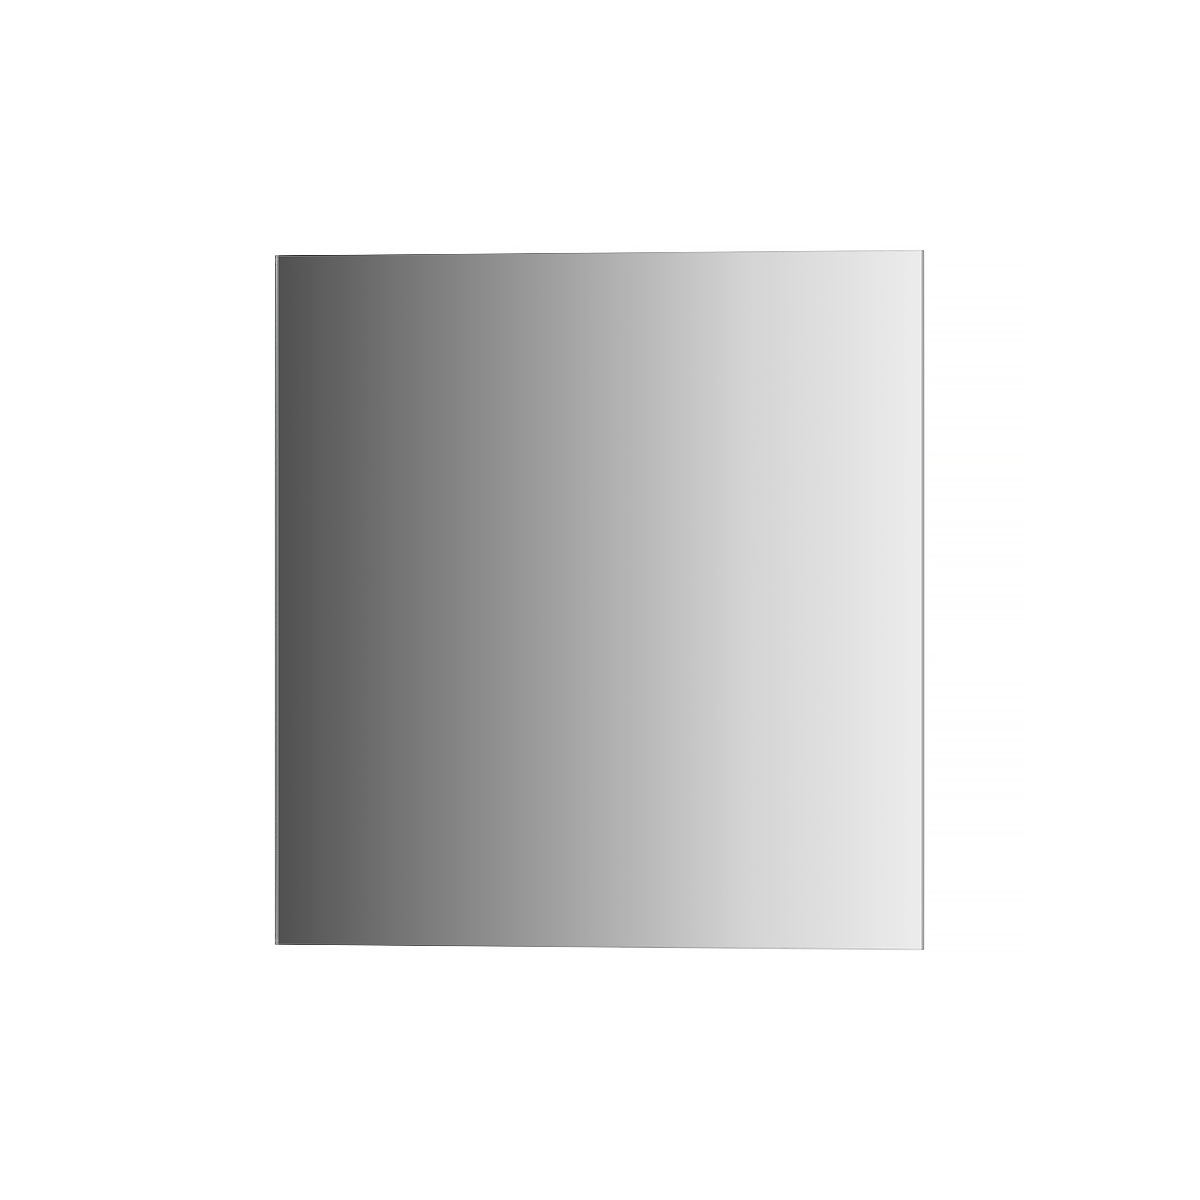 Зеркальная плитка со шлифованной кромкой  Evoform BY 1407 25x25см зеркальная плитка mirox 3g sensea nnlm25 квадратная 15x15 см глянцевая серебро 1 шт